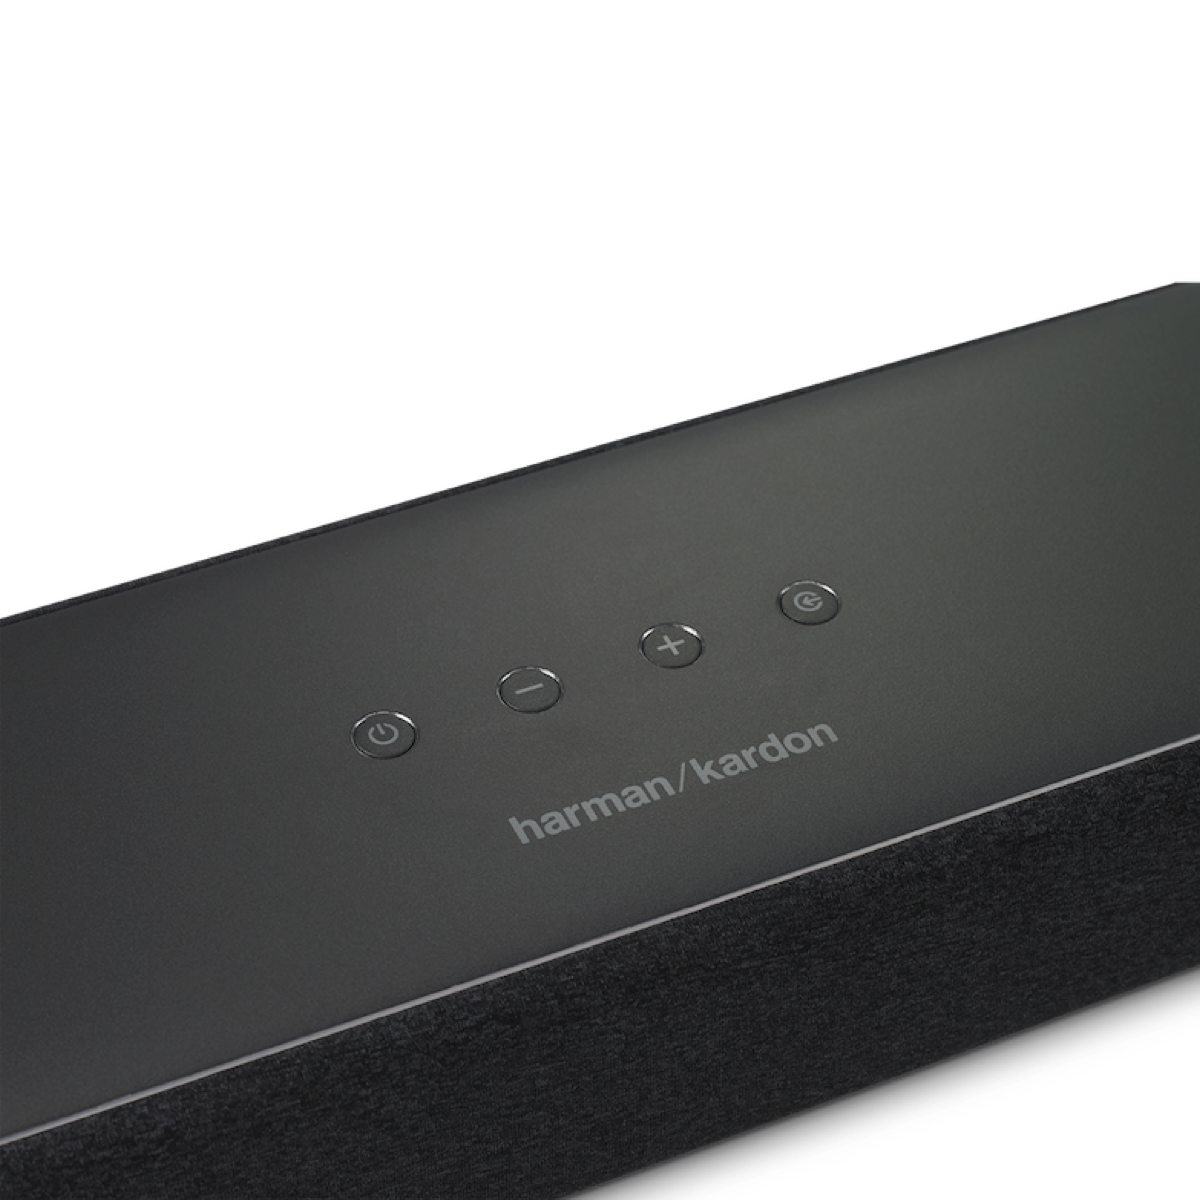 The Harman Kardon® Onyx™ Wireless Speaker System Delivers